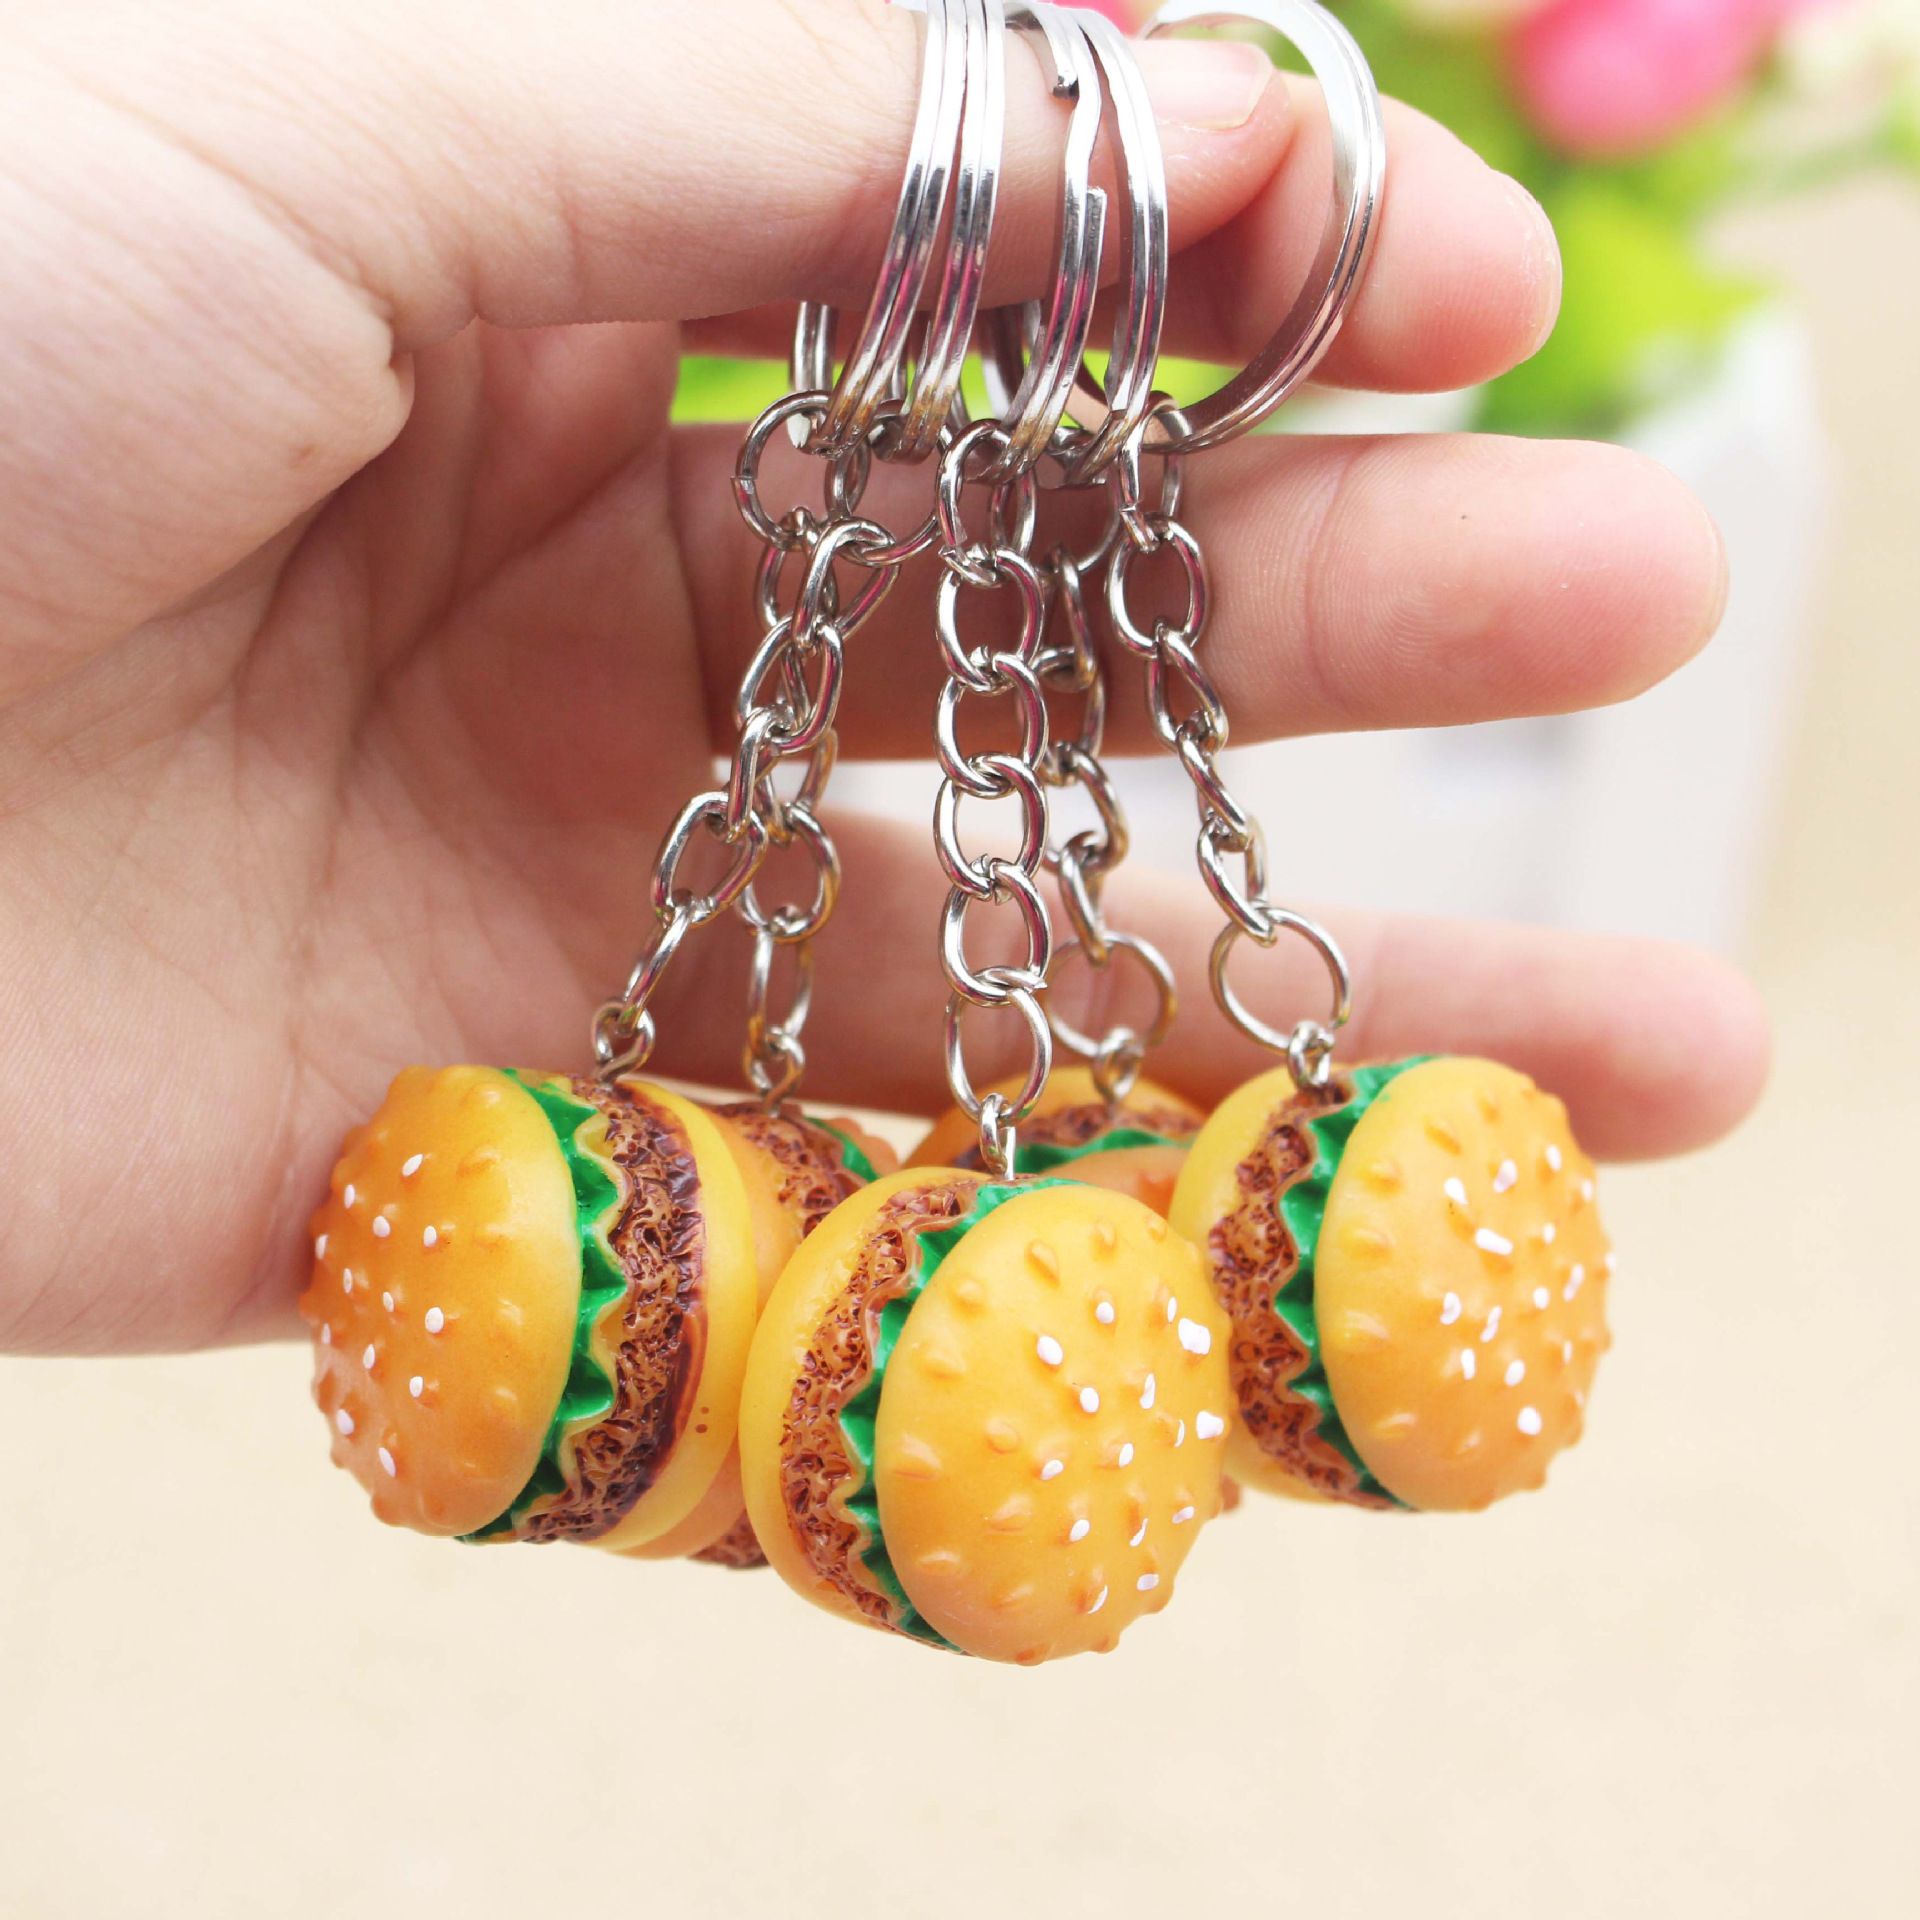 Resin Mini Simulation Food Hamburger Pendant Key Chain Keyfob Car Phone Bag Gift